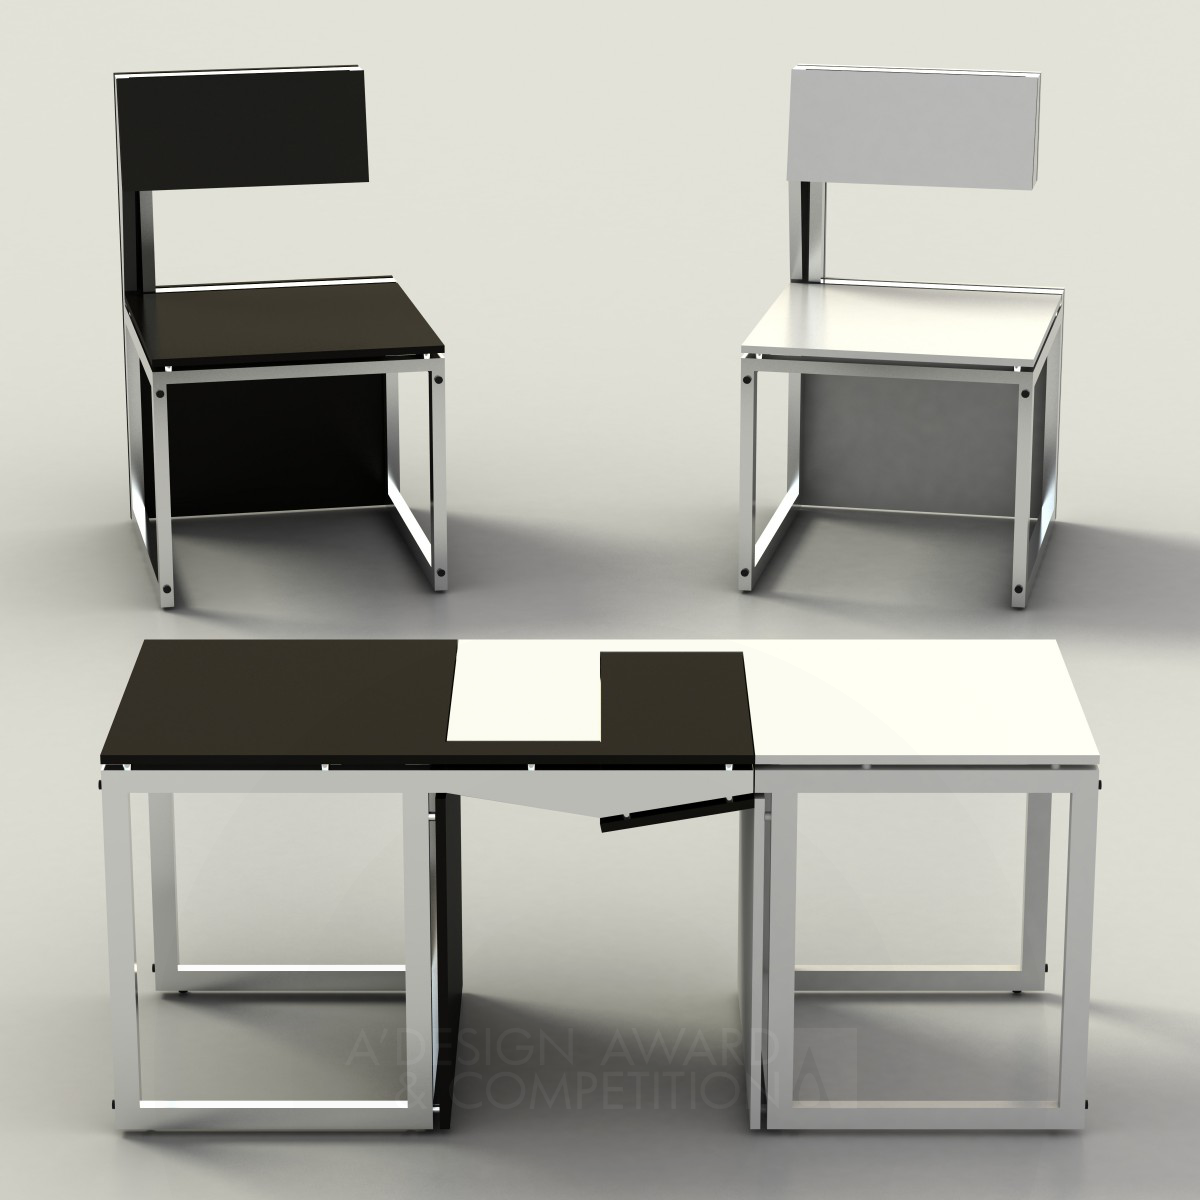 Sensei <b>Transformable Chairs and Coffee Table